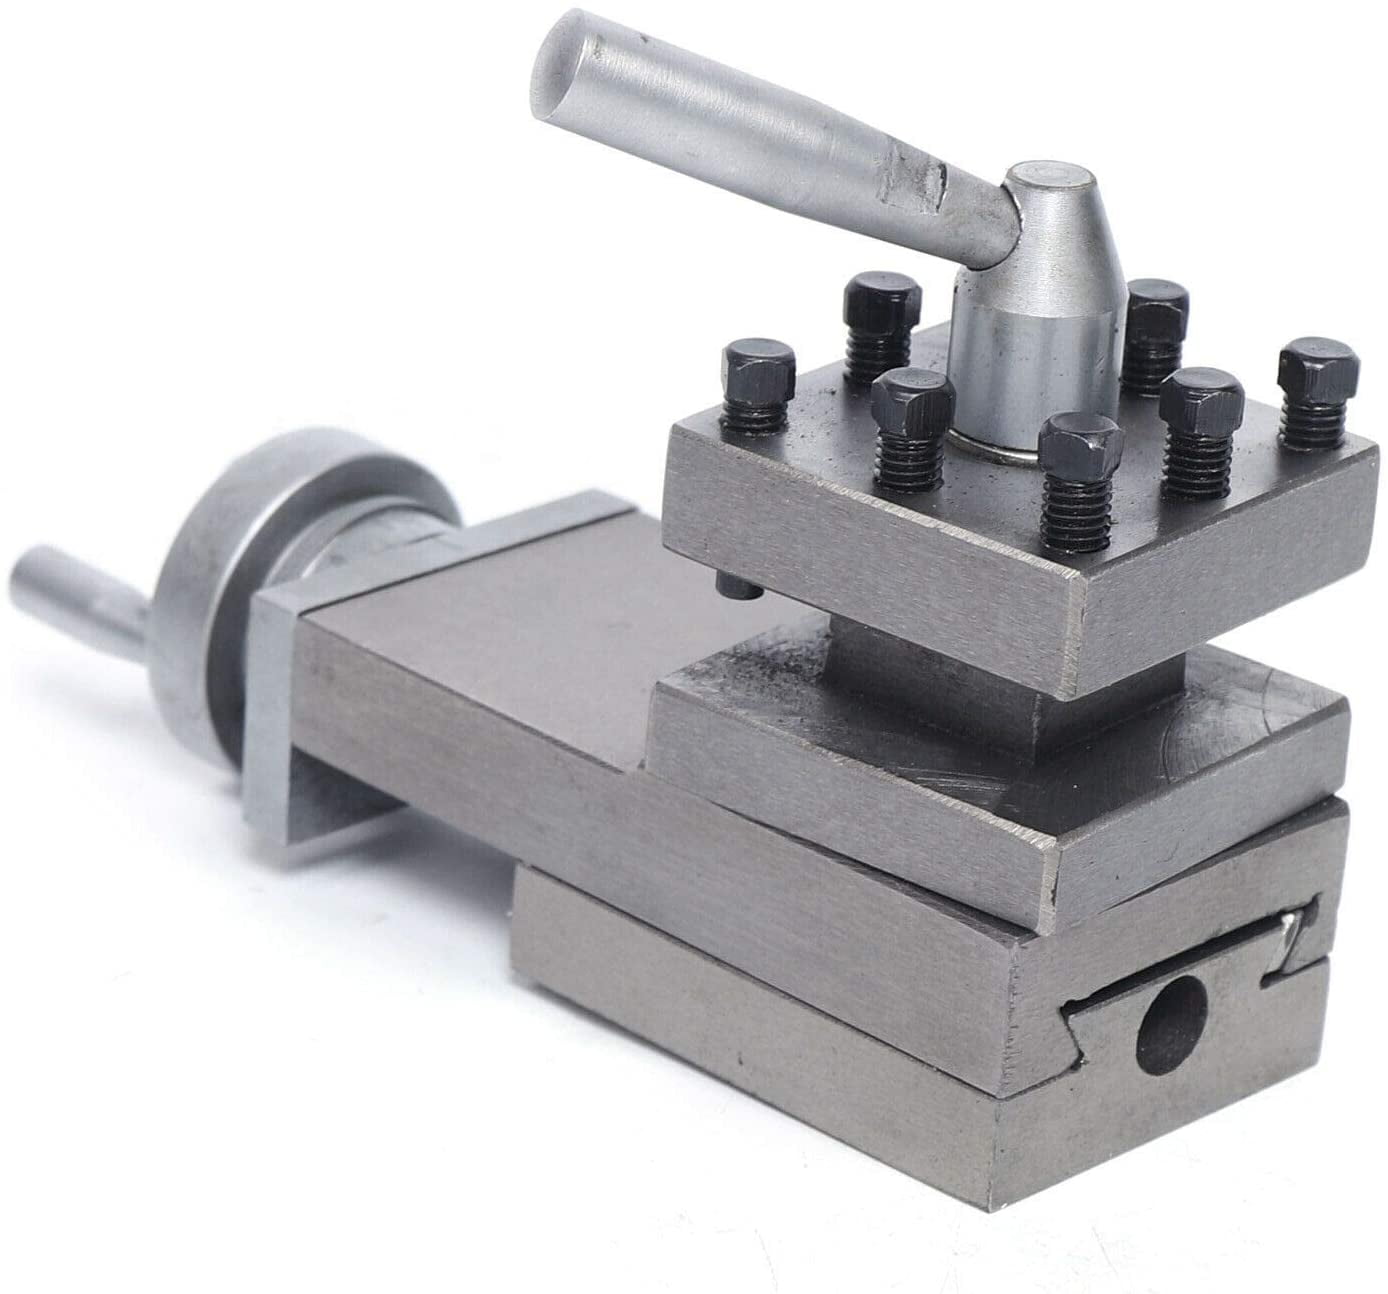 SCHWANOG METAL LATHE toolholder  12x16x130/6  #100044 Details about    1 